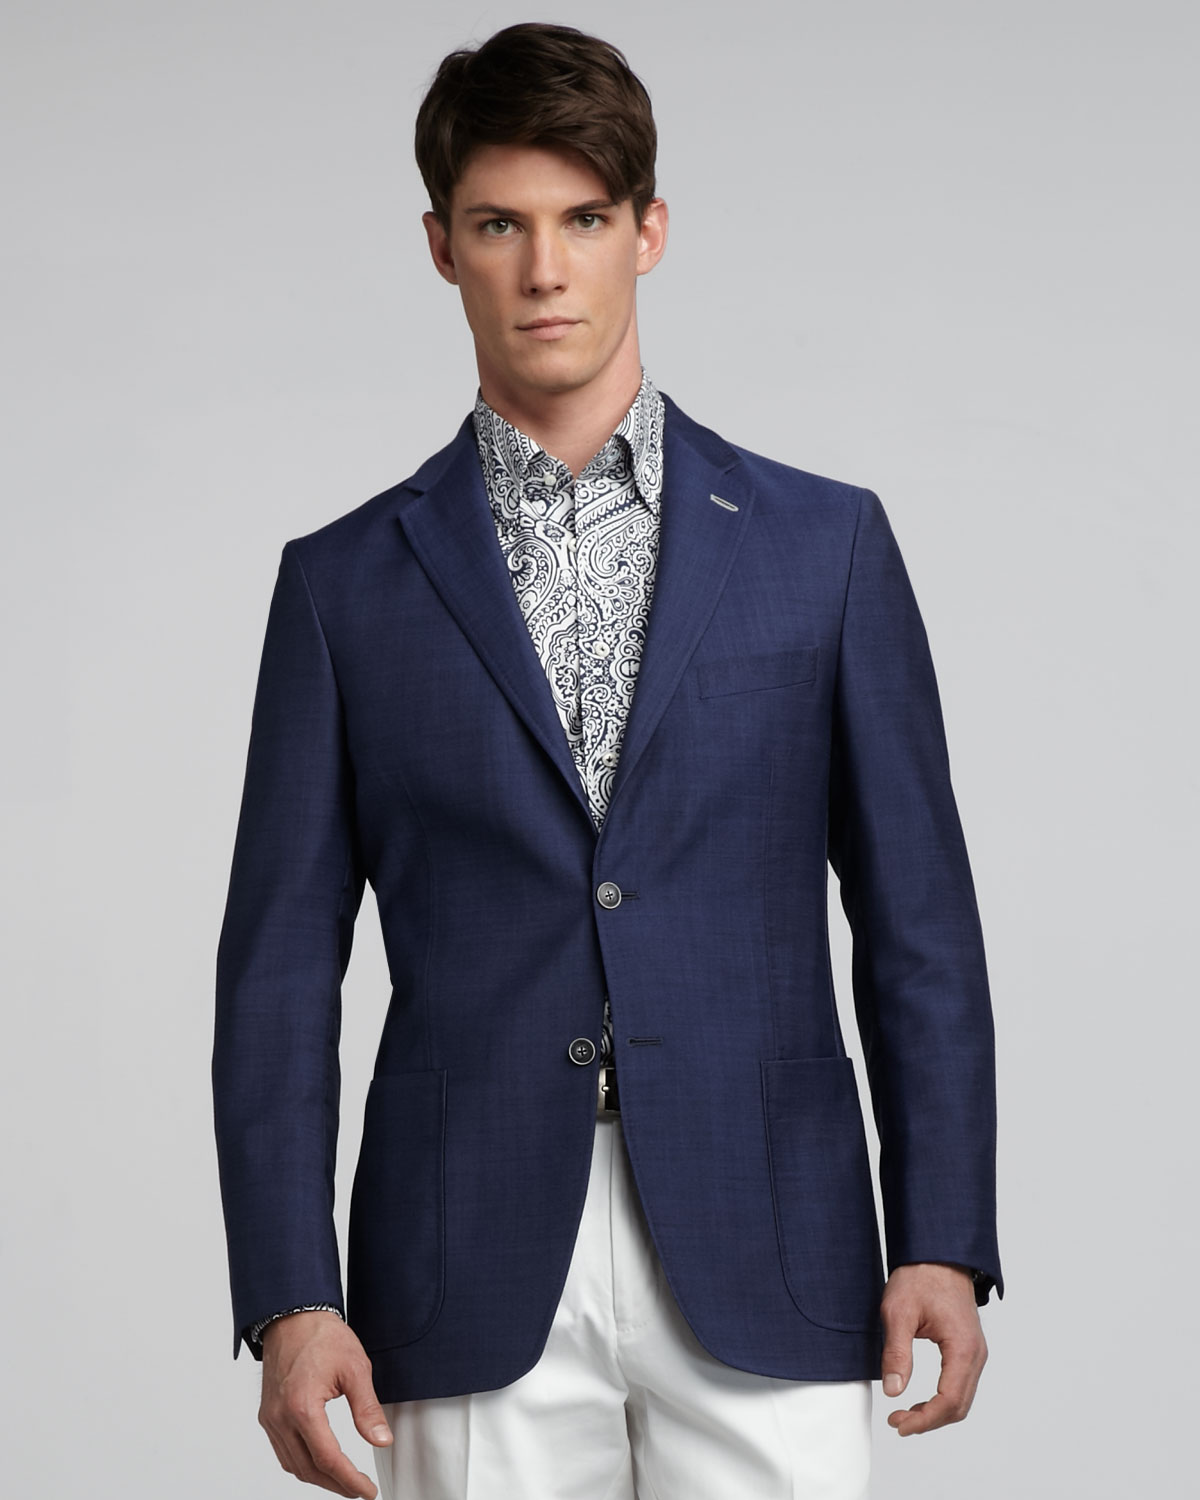 Lyst - Peter Millar Twobutton Wool Blazer in Blue for Men